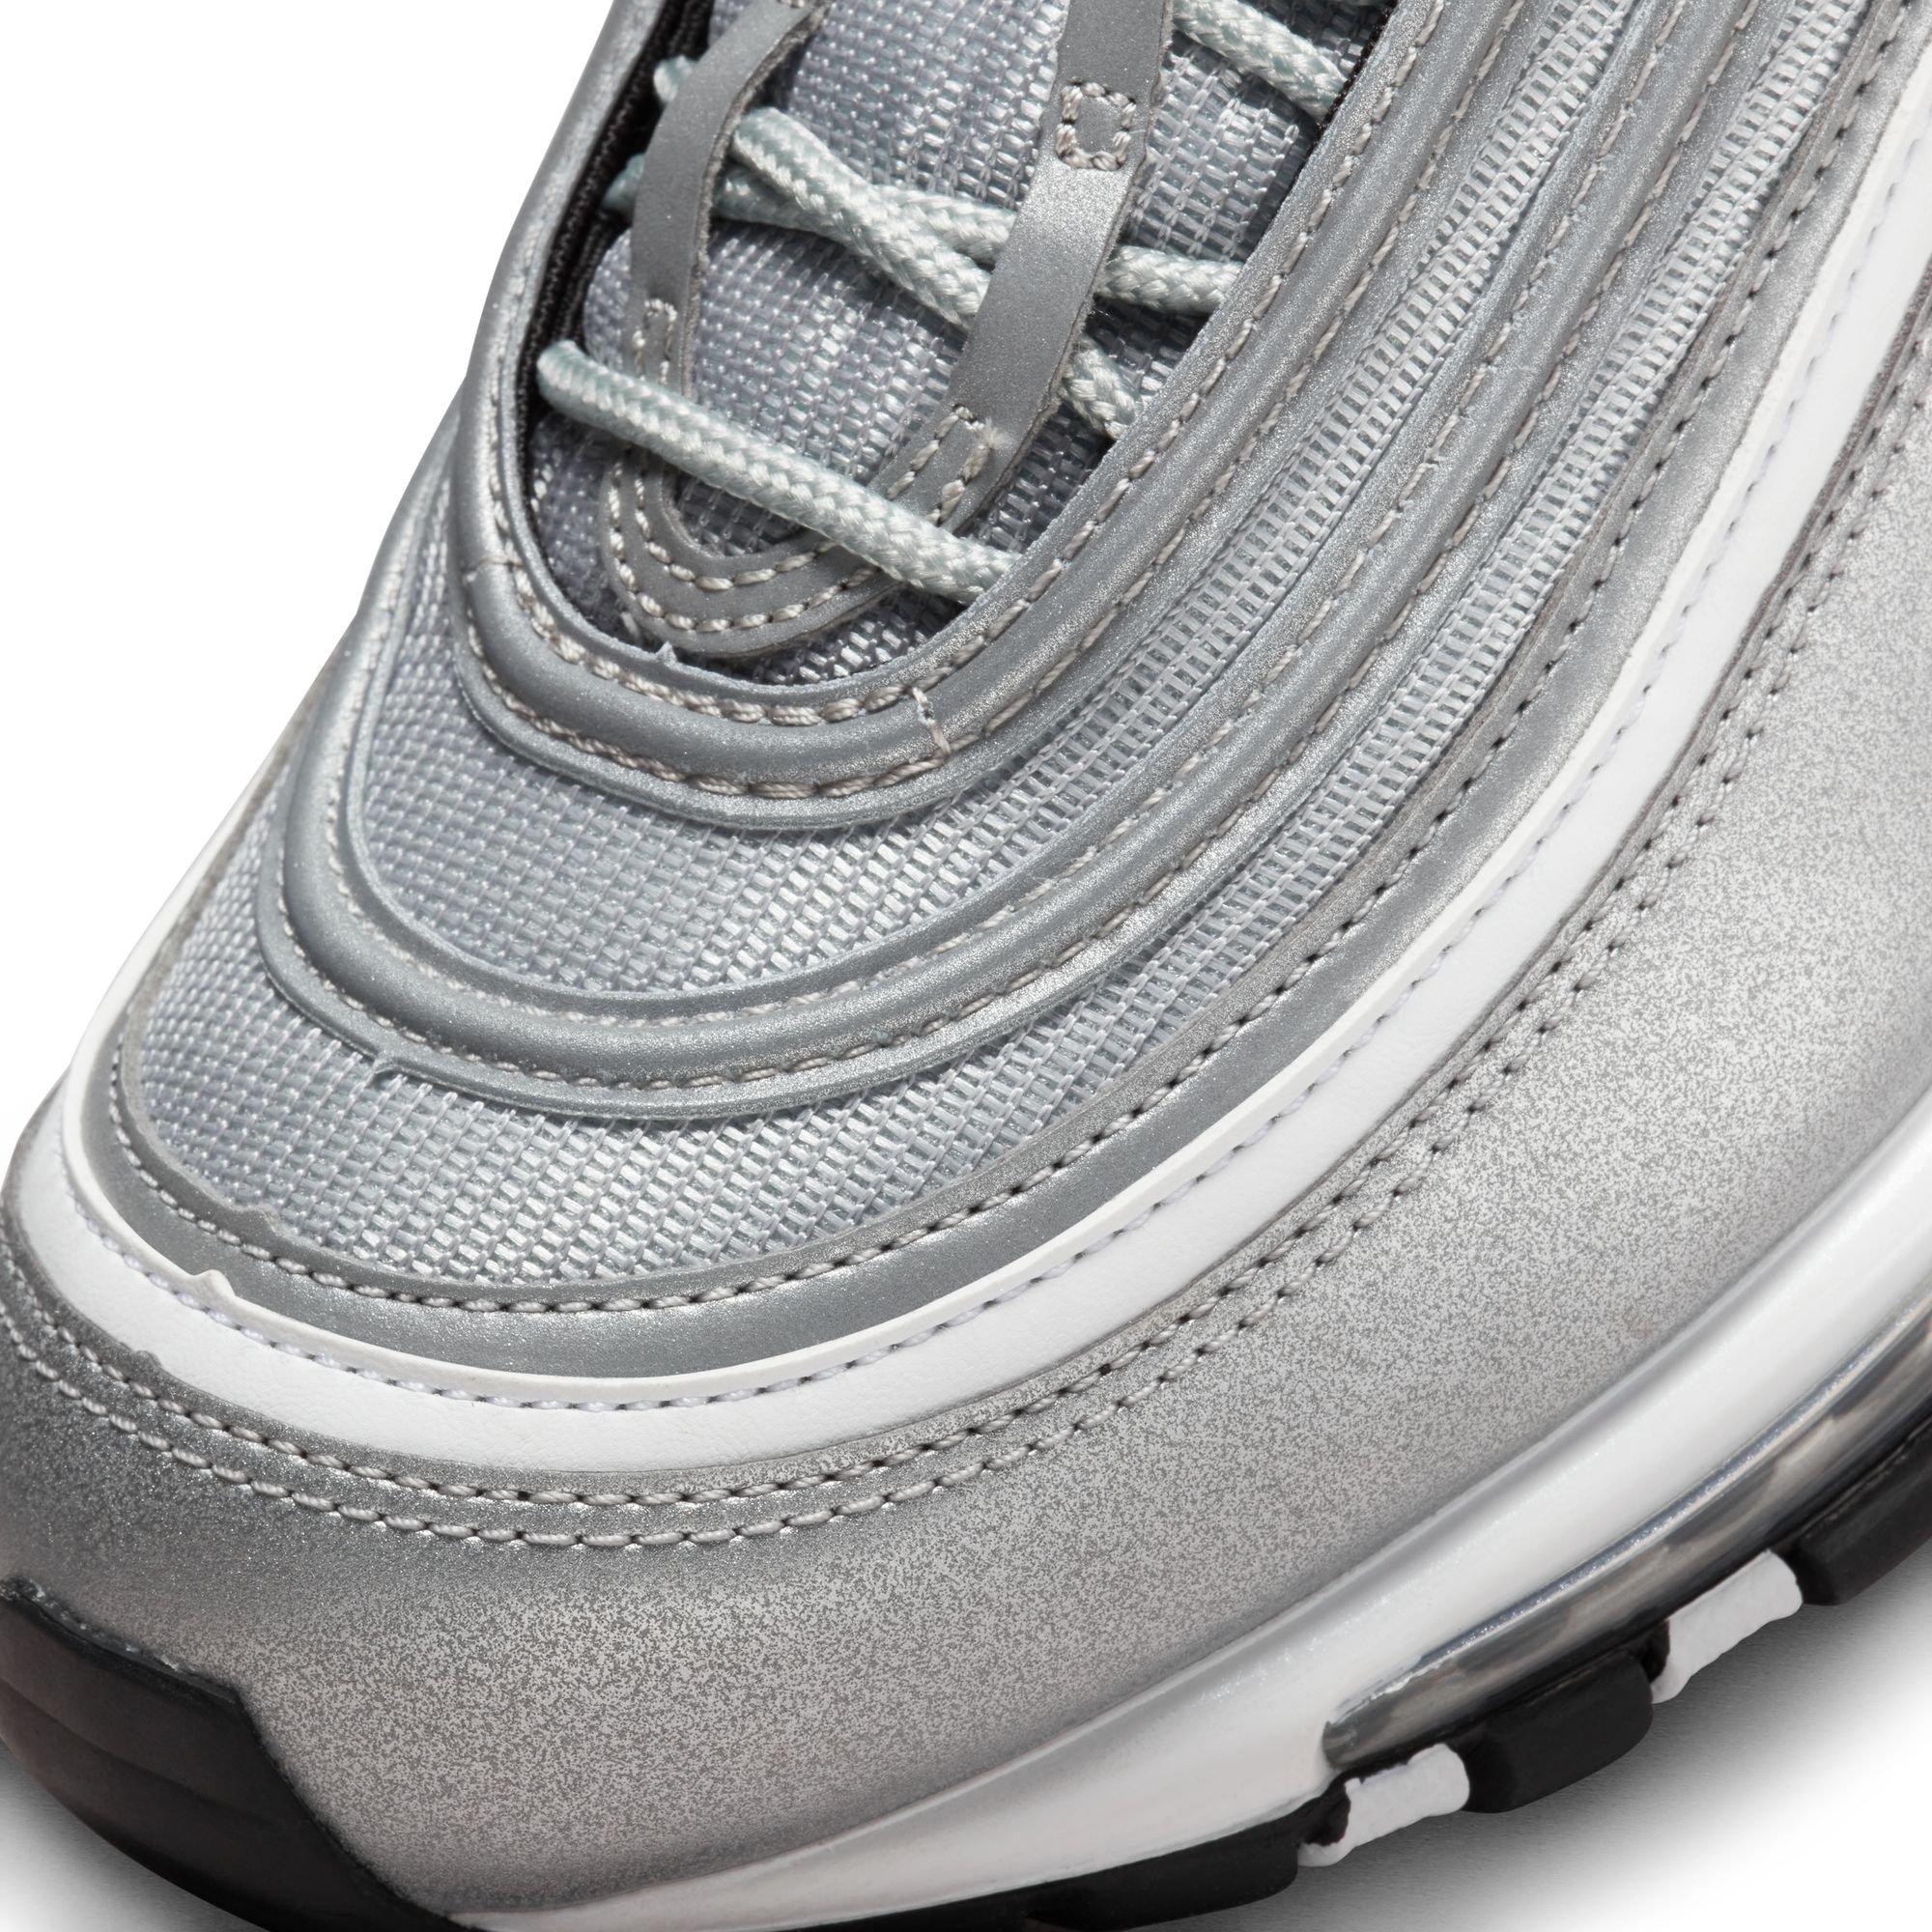 Nike Air Max 97 OG​ "Metallic Silver/University ​Men's Shoe​